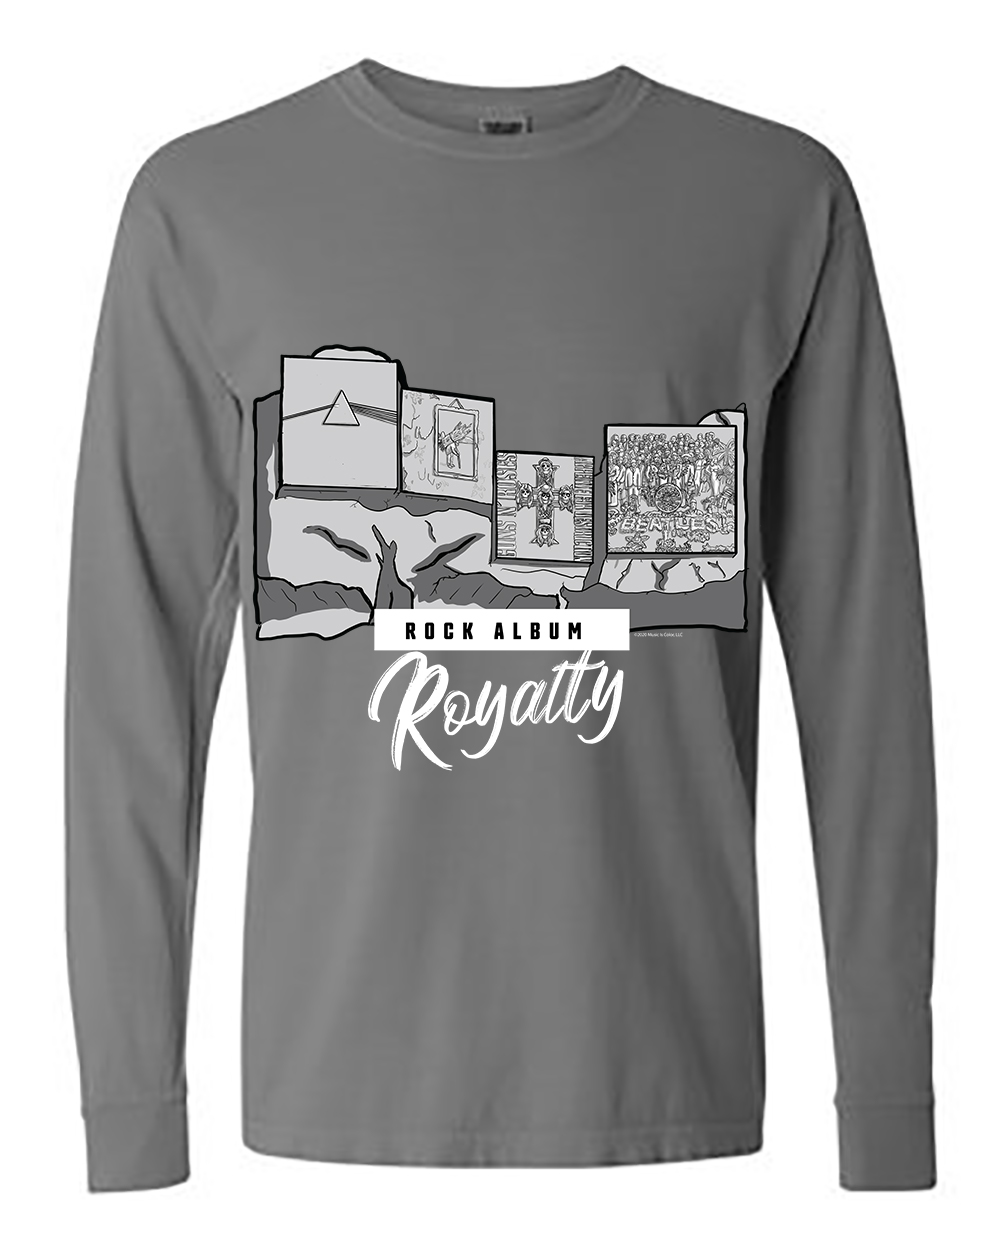 Mount Rushmore - Rock Album Royalty (Gray Long Sleeve Shirt)